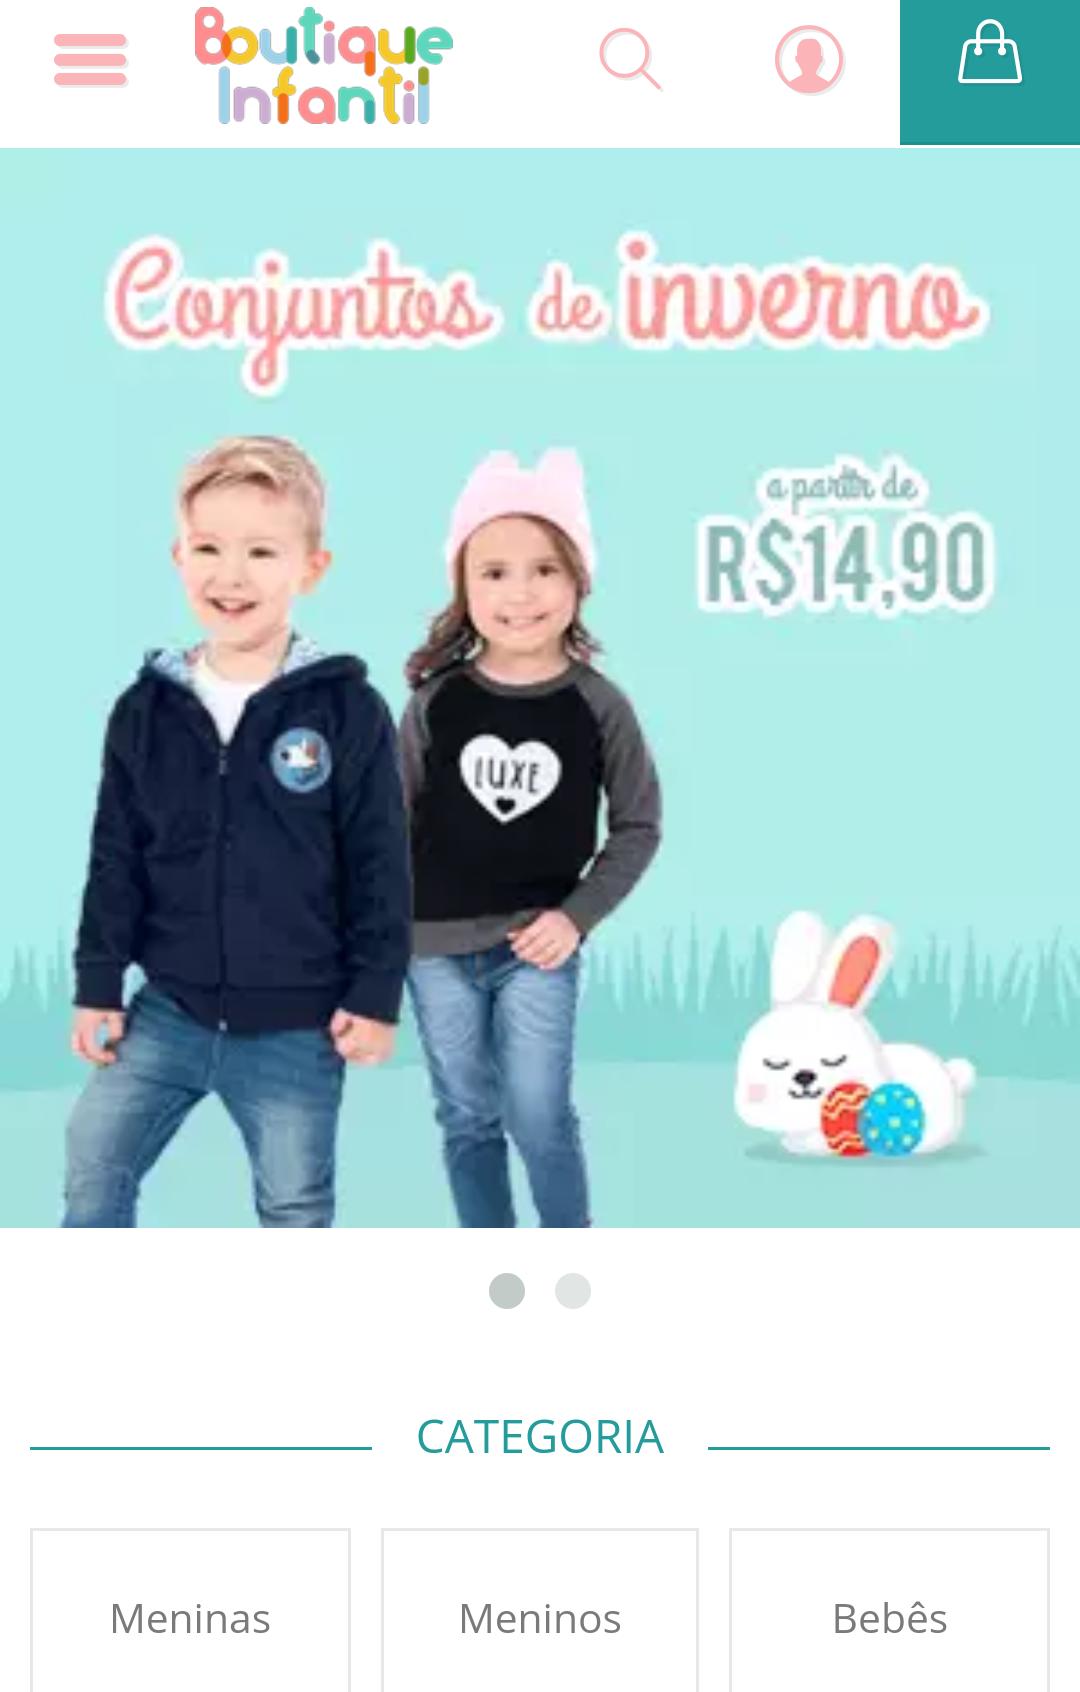 Loja Boutique Infantil for Android - APK Download